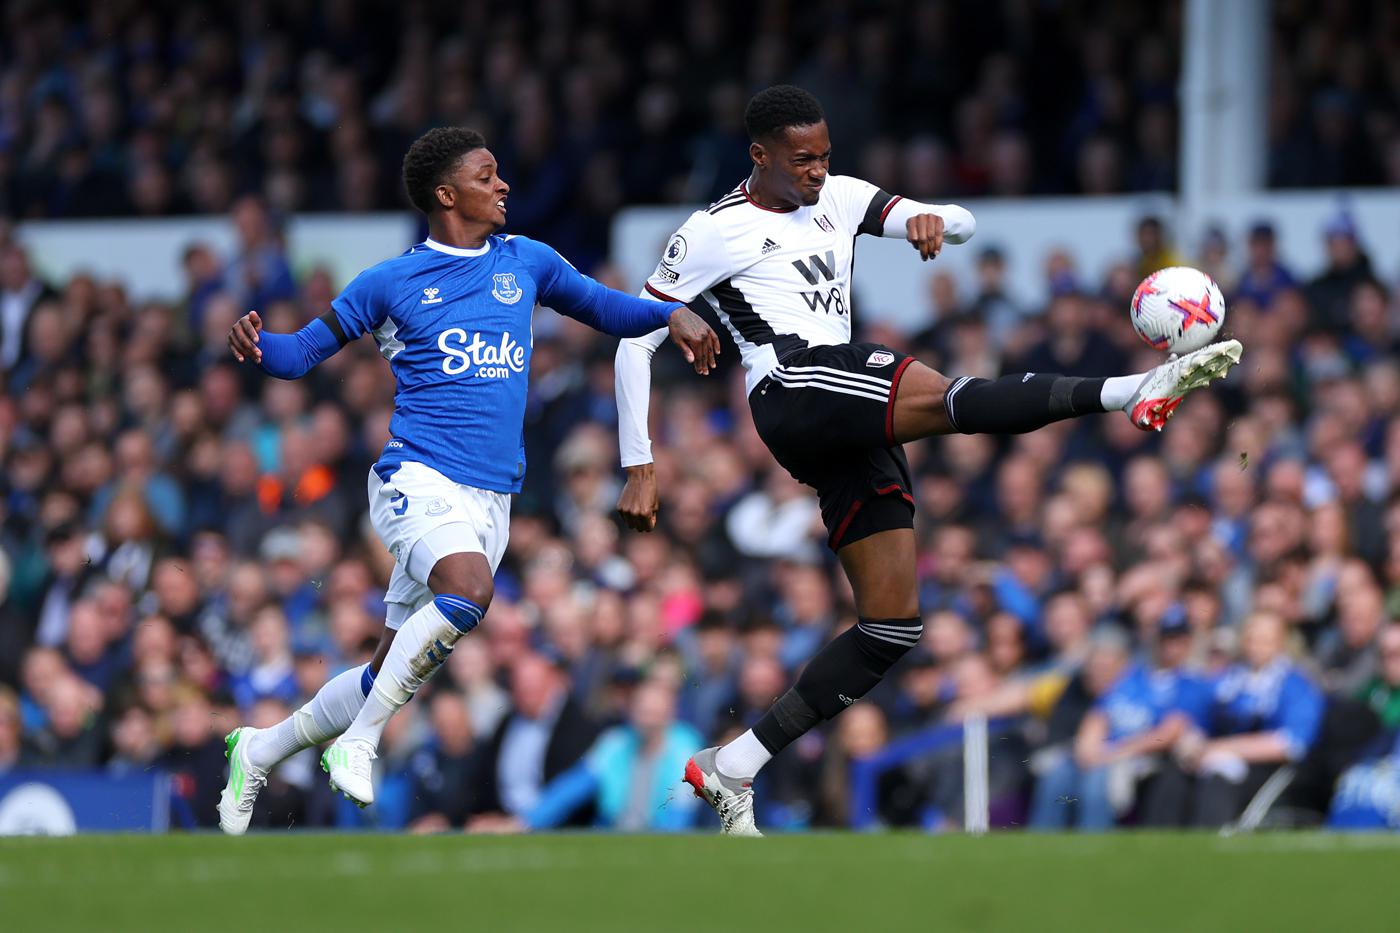 Everton - Fulham - 1:3. Championship of England, 31st round. Match review, statistics